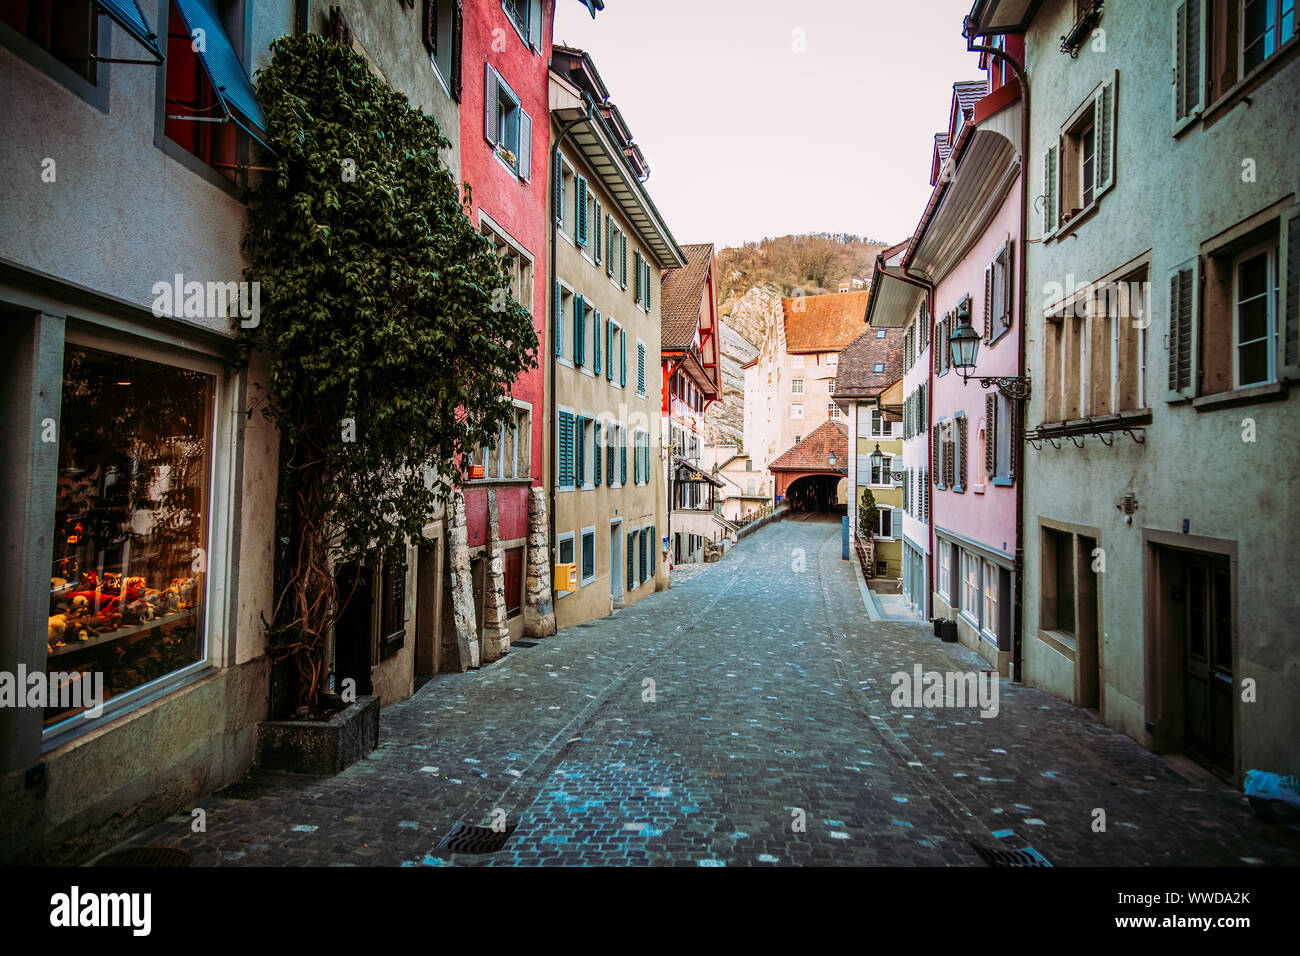 Old town street in medival city of Baden, canton Aargau in Switzerland Stock Photo